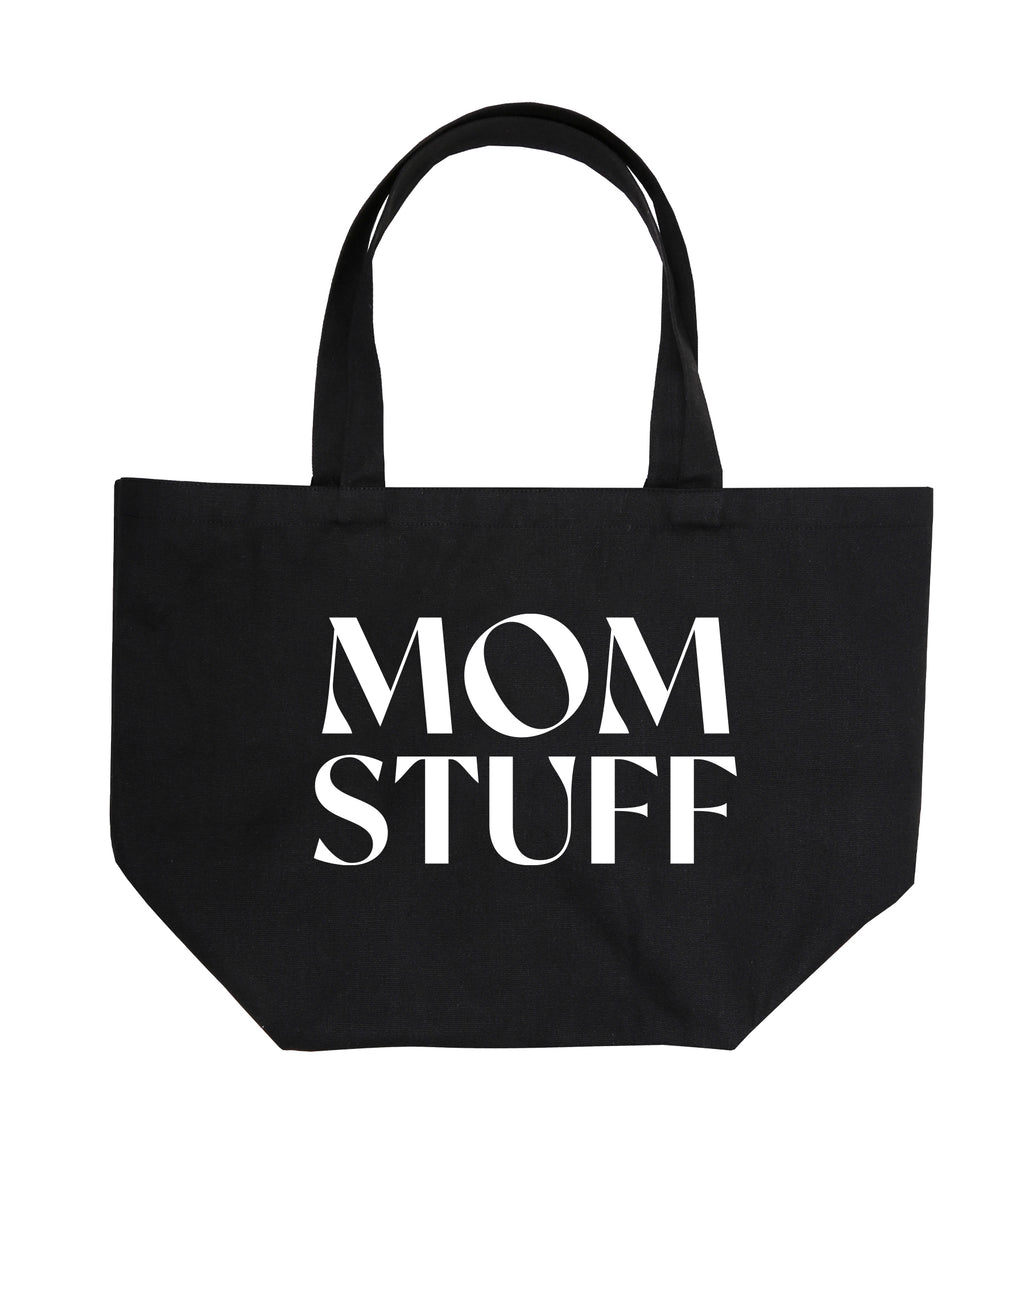 Brunette The Label - Mom Stuff Tote Bag